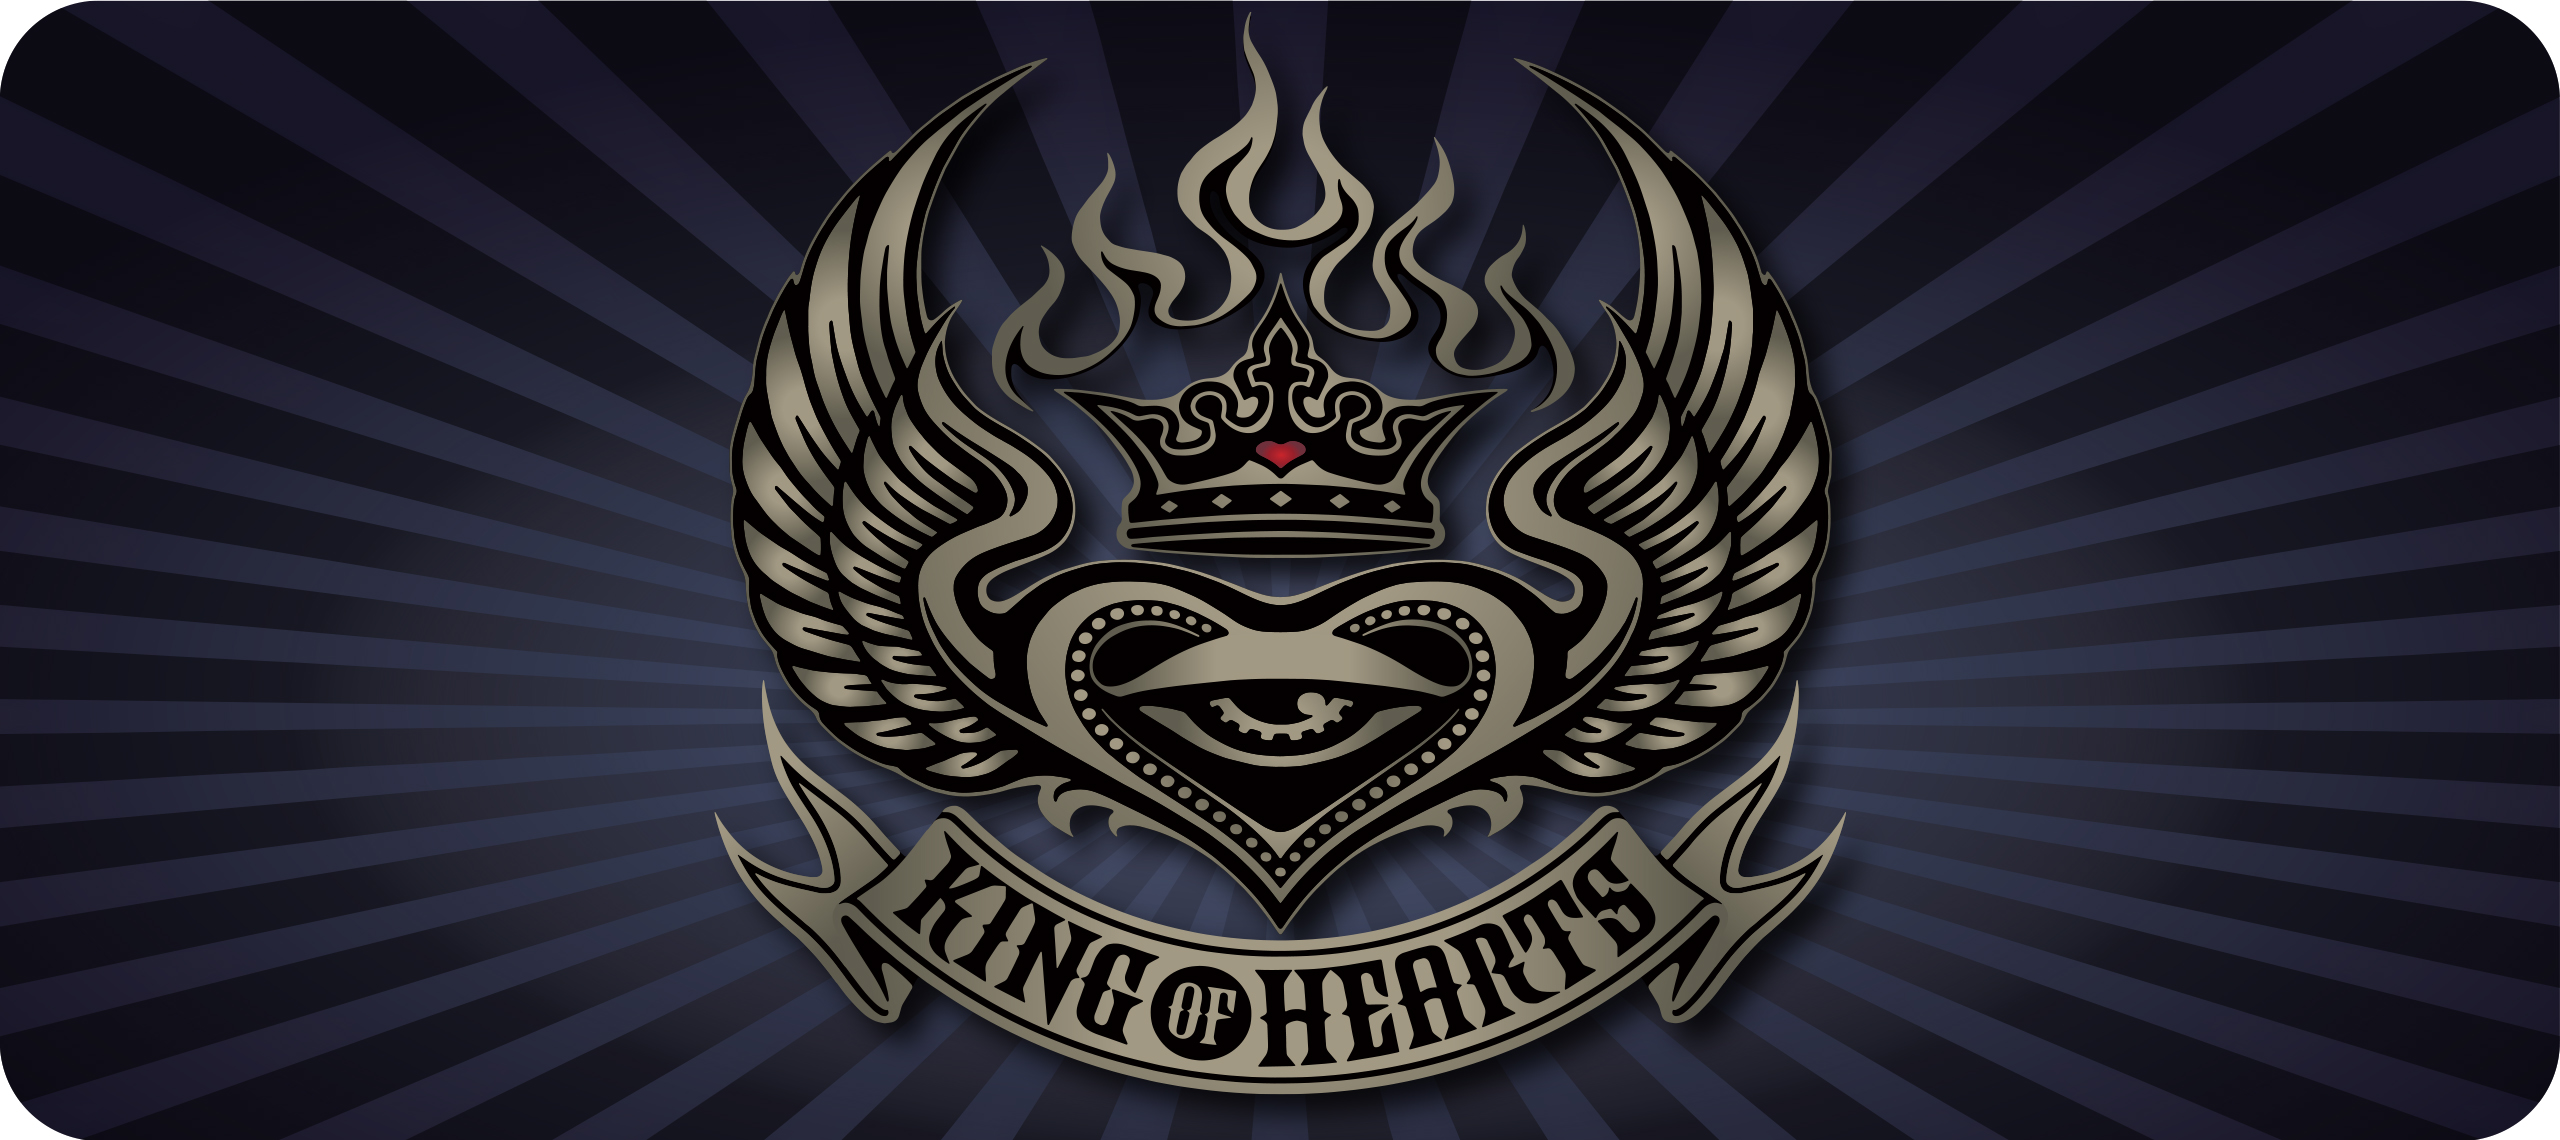 king of hearts band